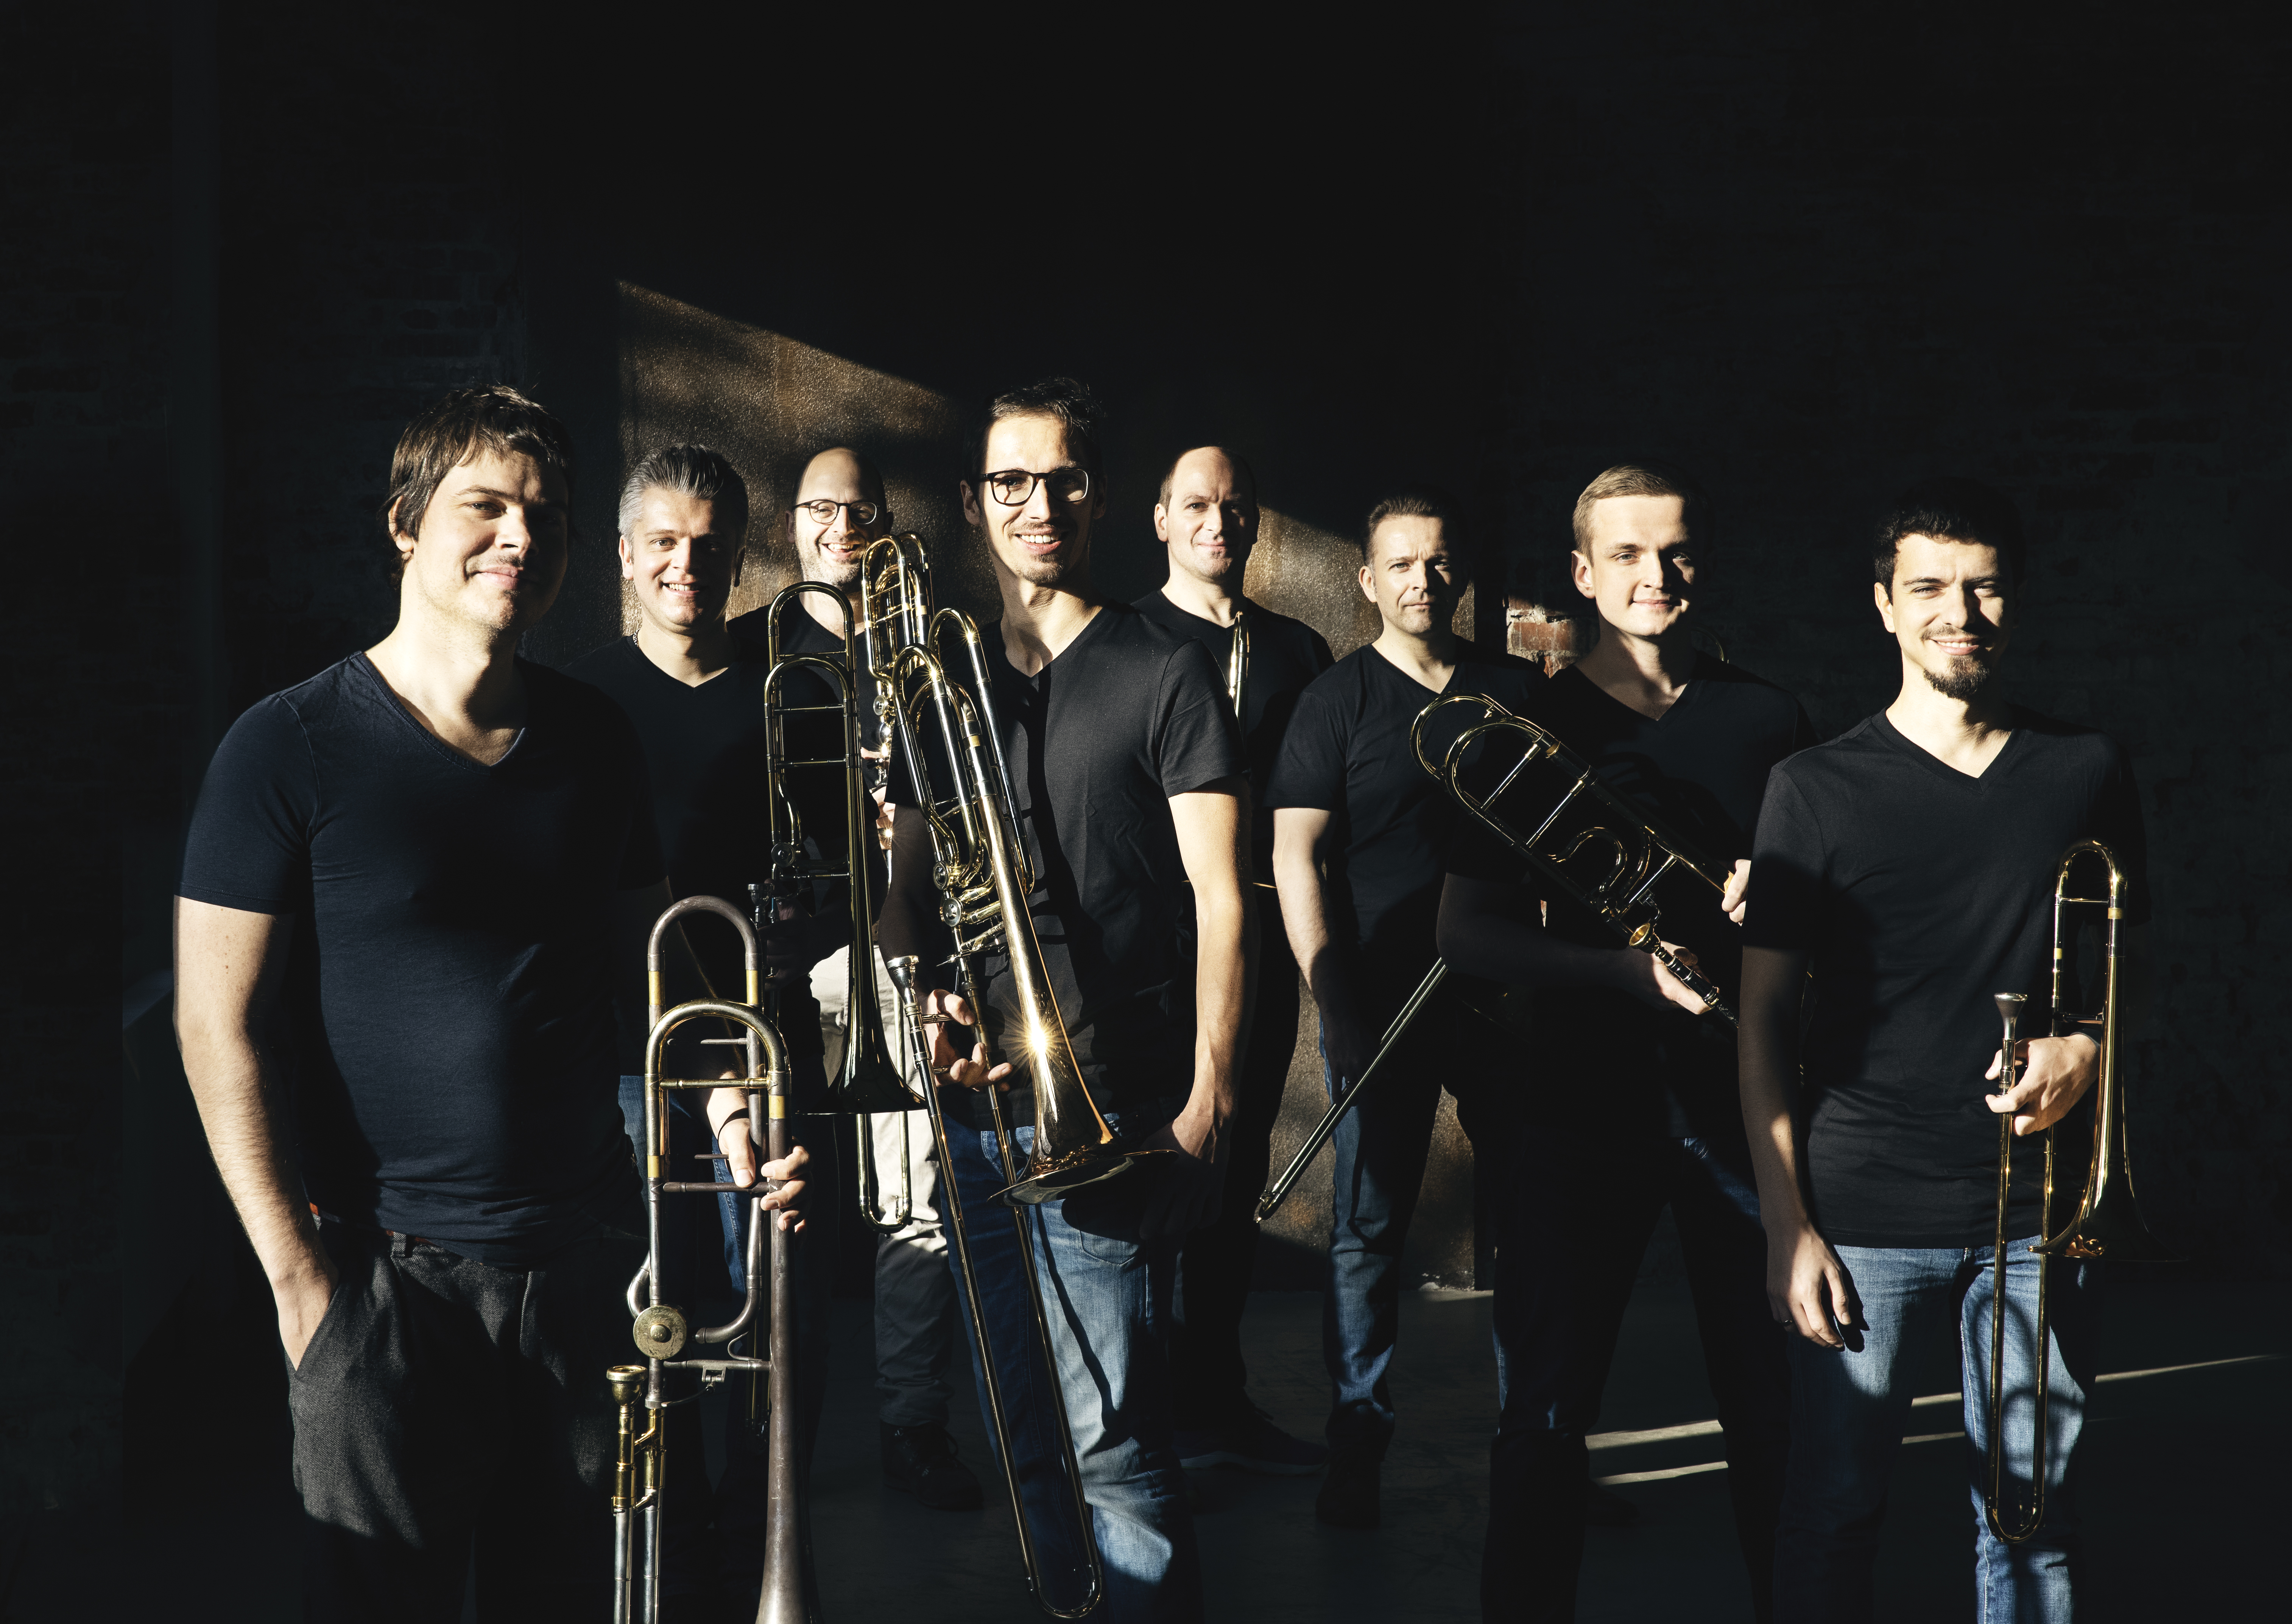 Trombone Unit Hannover - Dr. Andreas Janotta ARTS MANAGEMENT